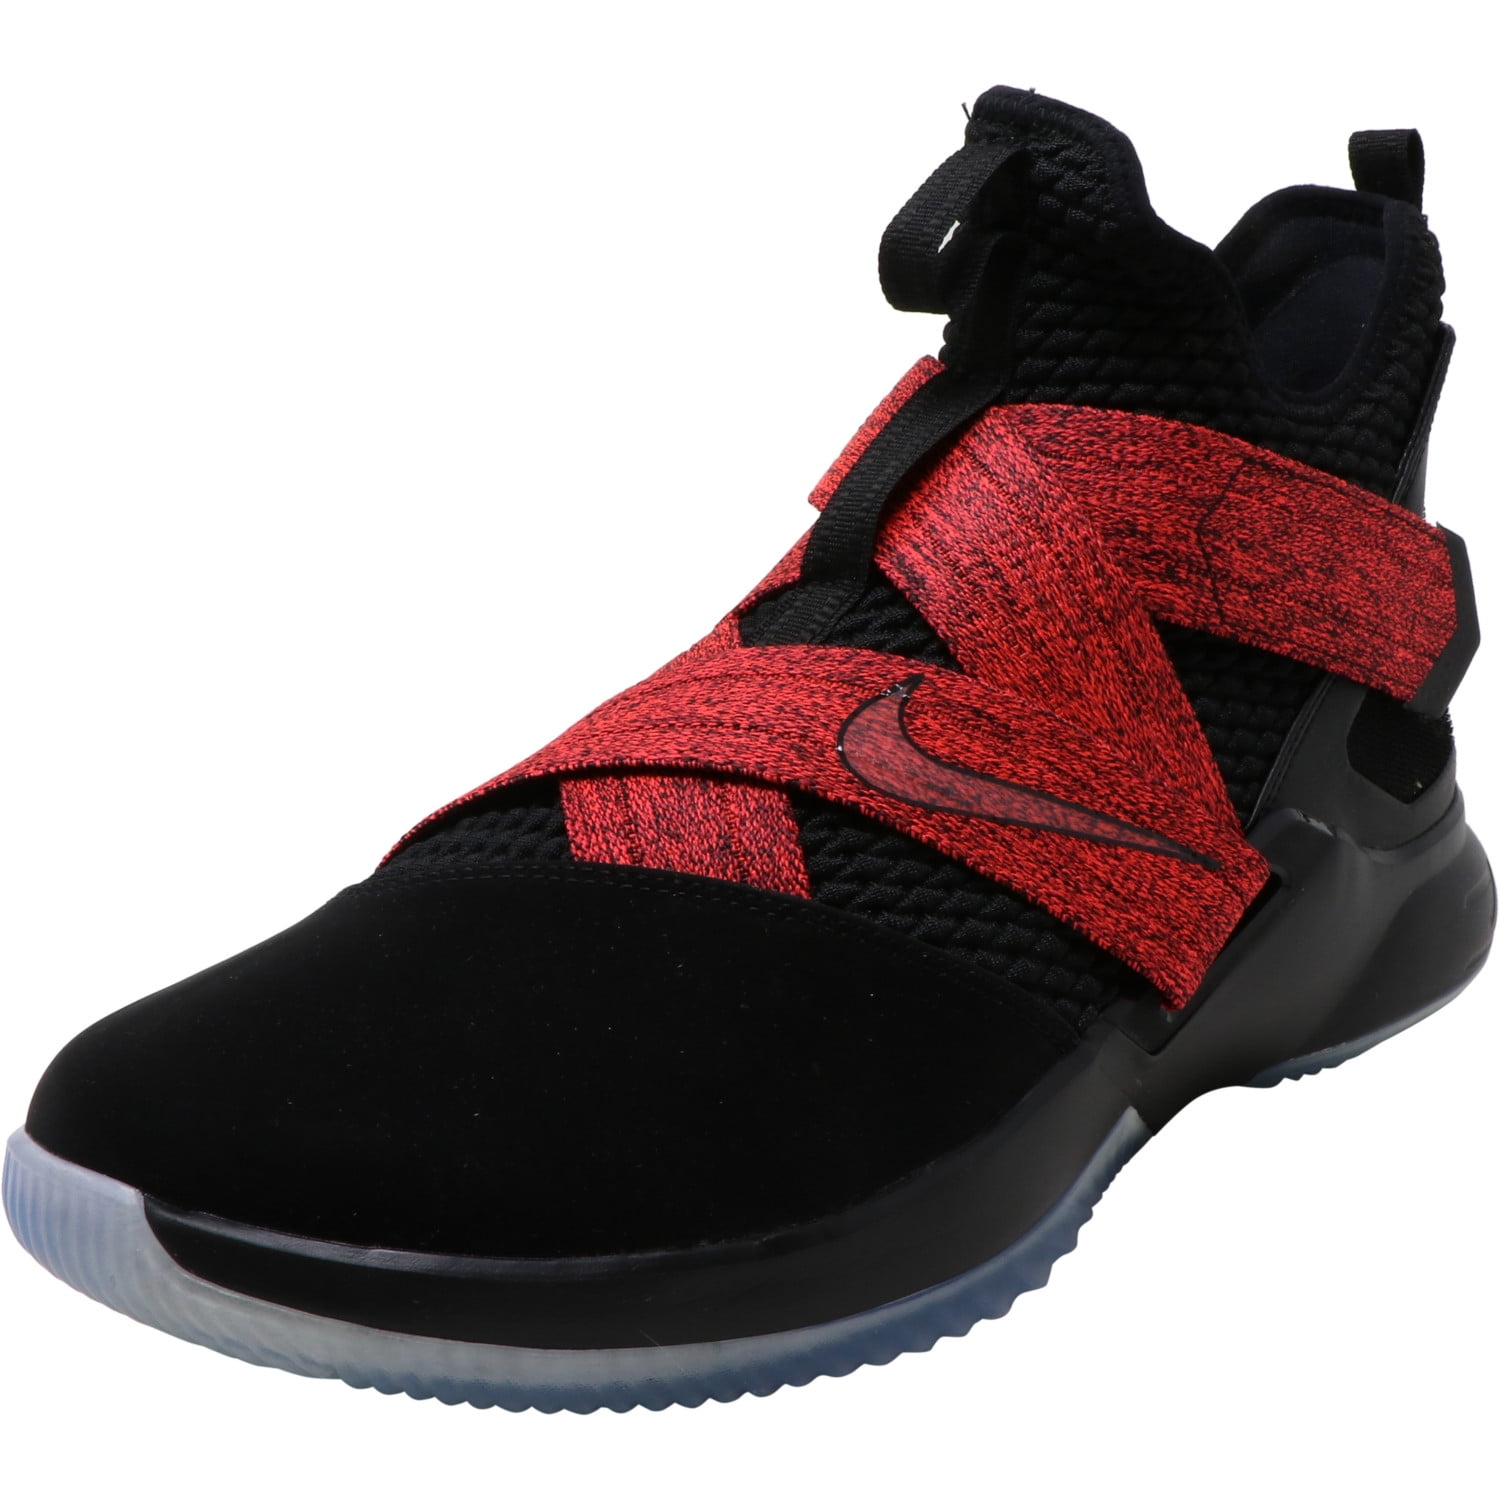 Nike - Nike Men's Lebron Soldier Xii Black / Ankle-High Indoor Court ...